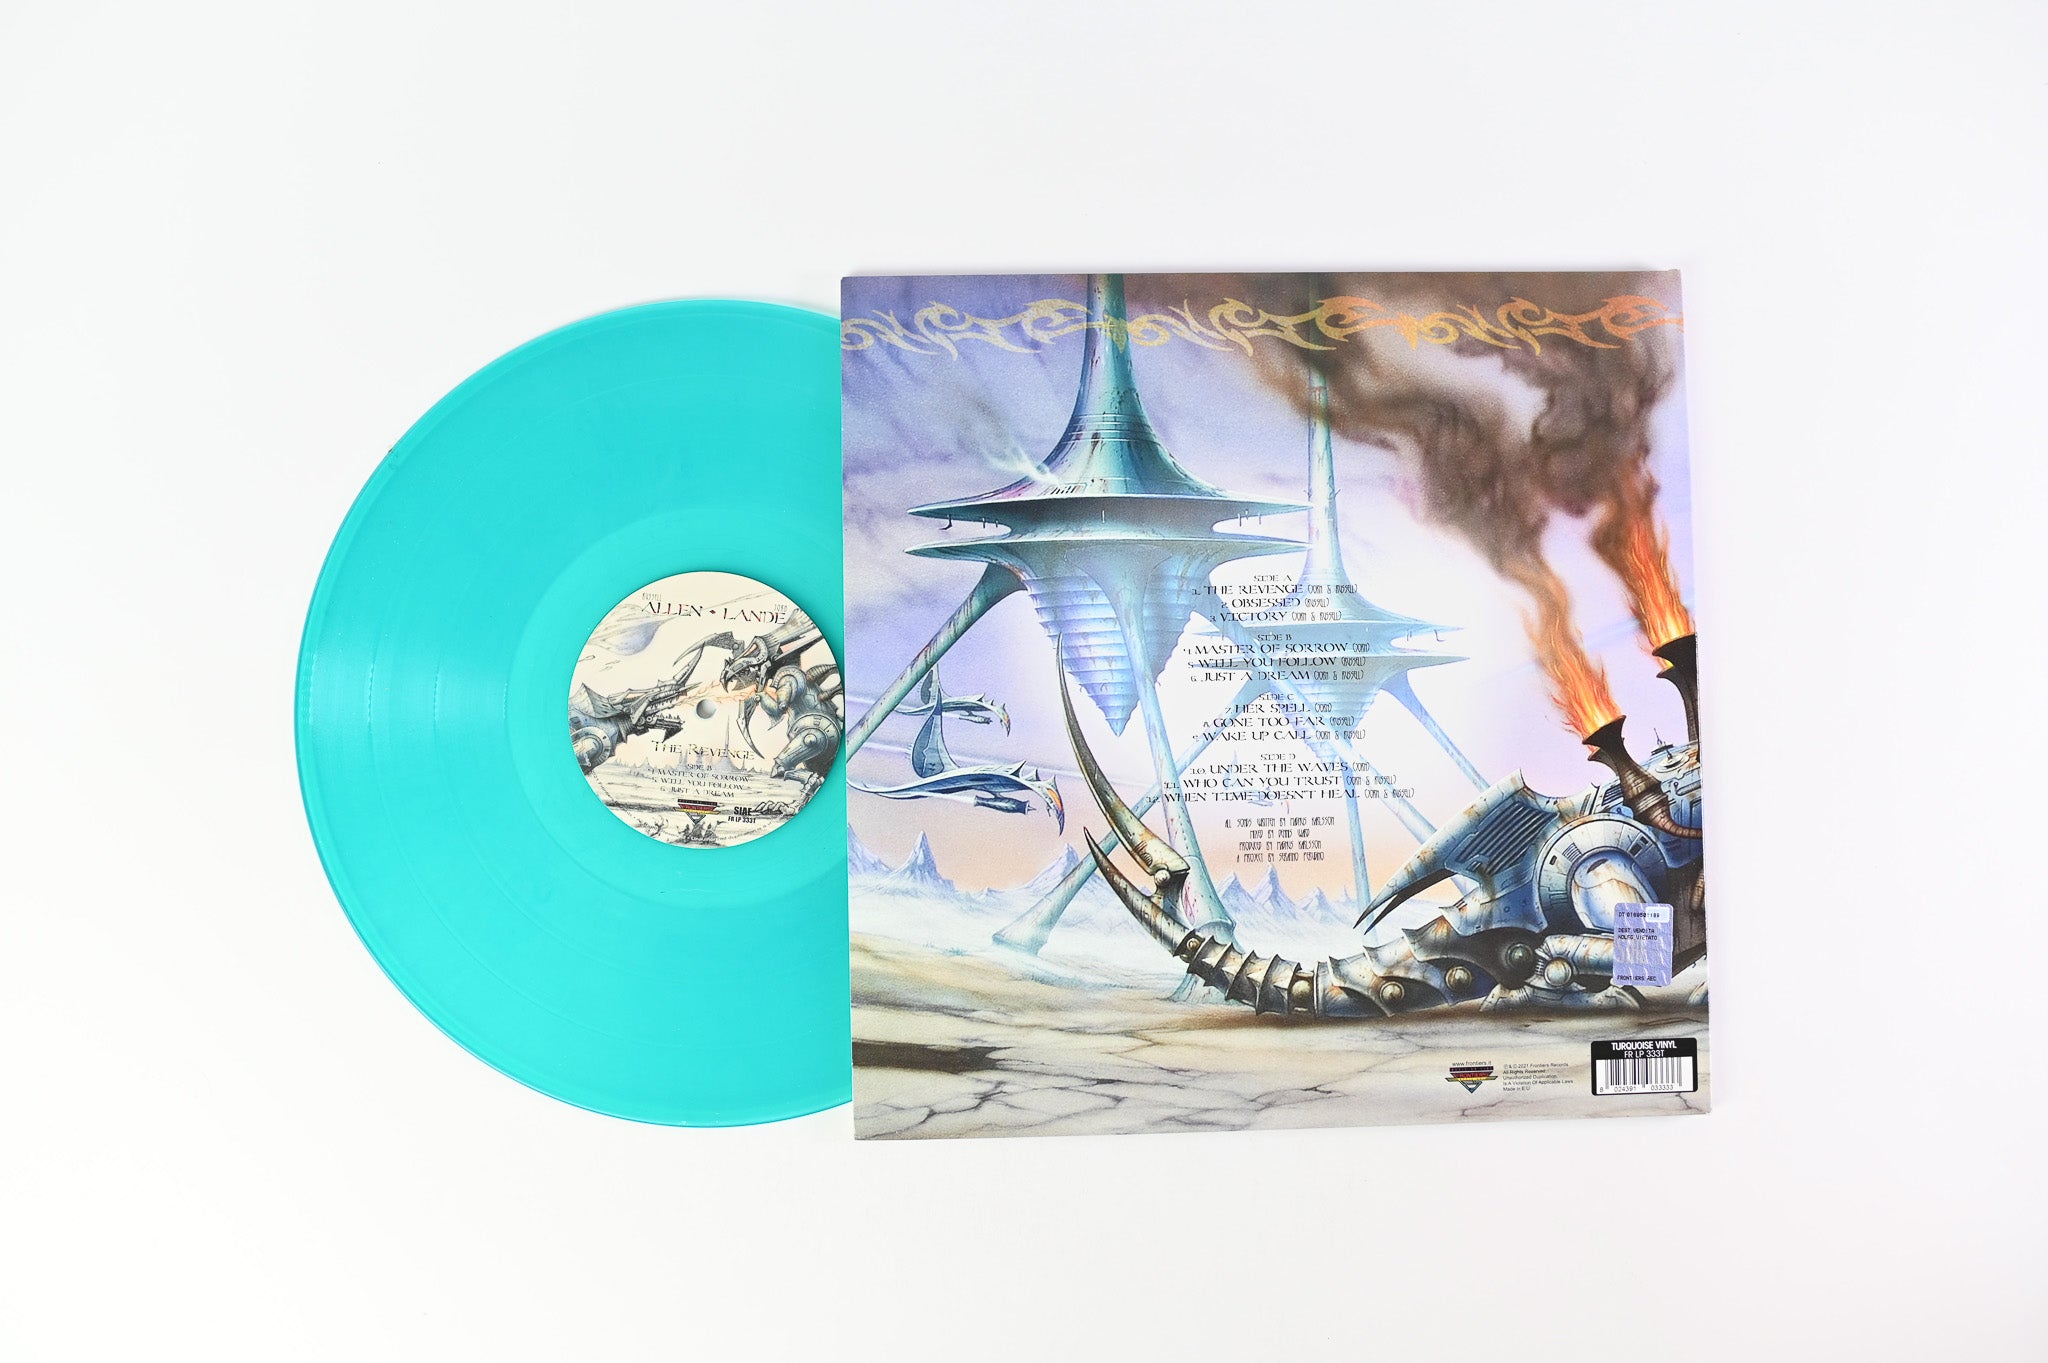 Allen - Lande - The Revenge on Frontiers Ltd Turquoise Vinyl Reissue